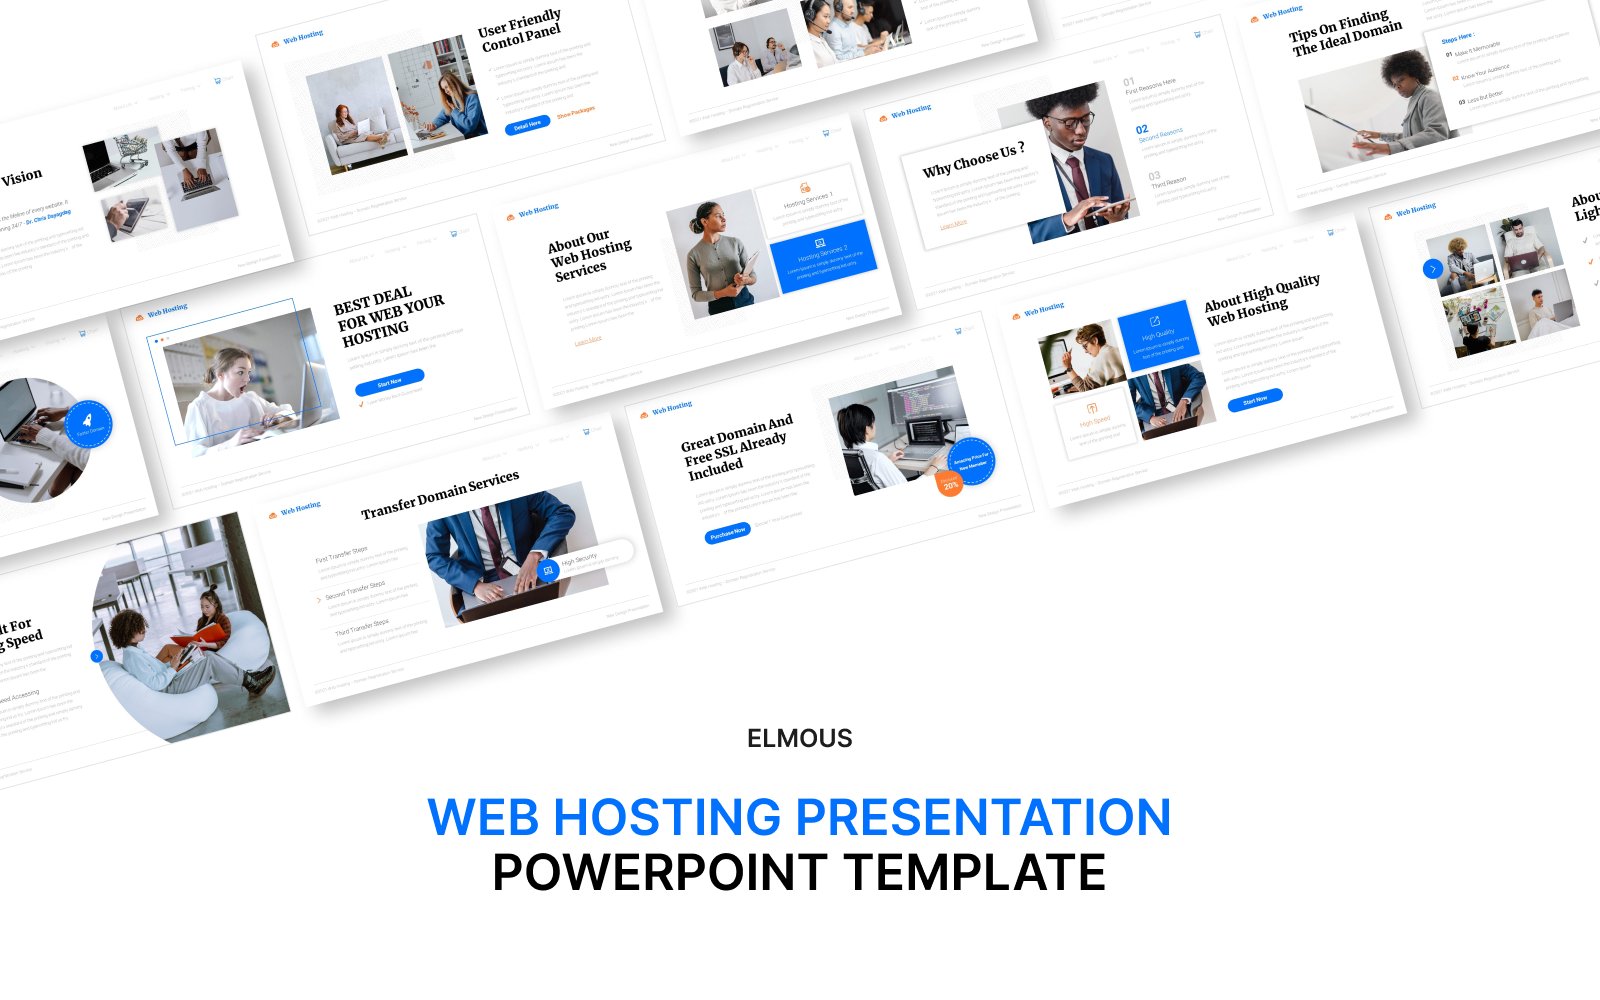 Web Hosting Powerpoint Template Presentation